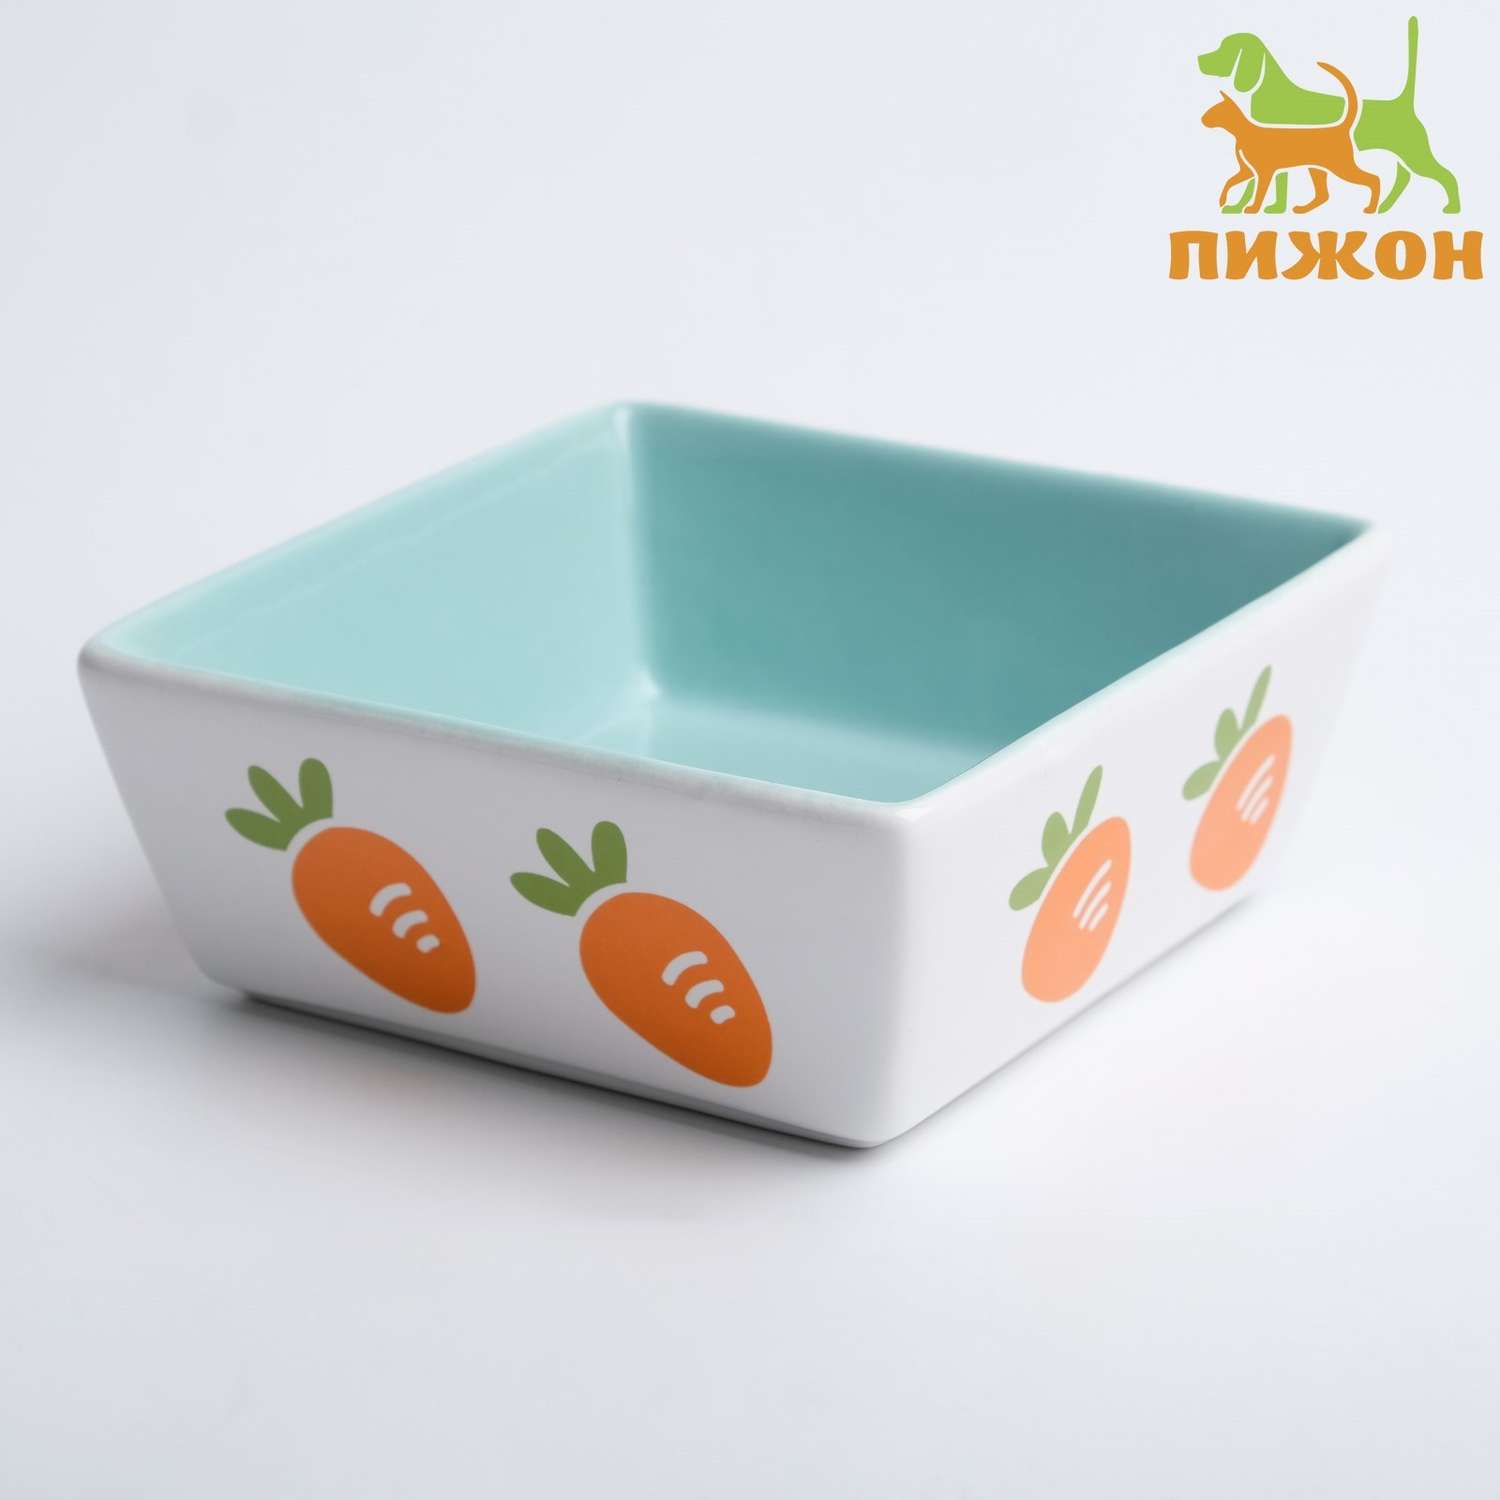 Миска Пижон керамическая квадратная «Морковки» 300 мл 11x4.5 cм зелёная - фото 1